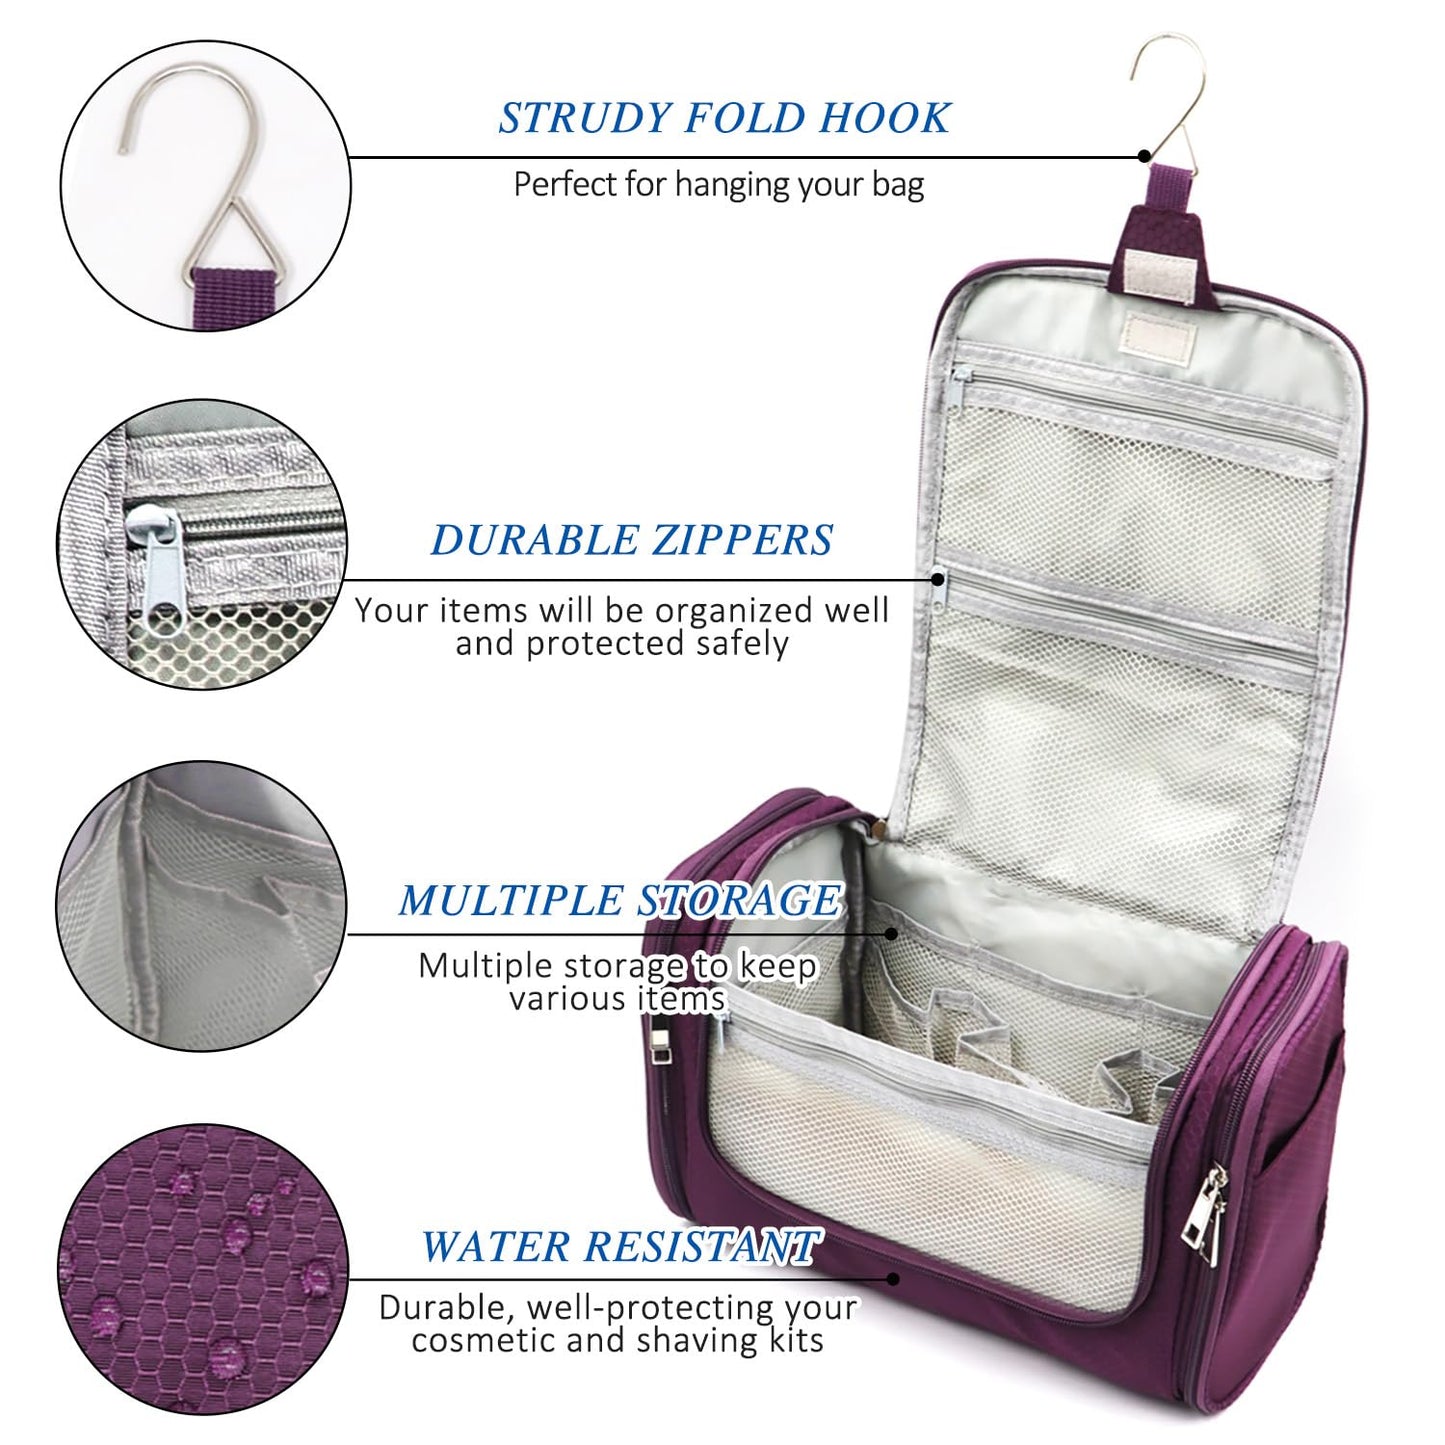 Buruis Large Capacity Toiletry Bag for Women and Men, Hanging Toiletry Organizer Cosmetics Makeup Bag, Water-resistant Dopp kit Shaving Bag for Full Sized Toiletries, Travel Essentials (Purple)